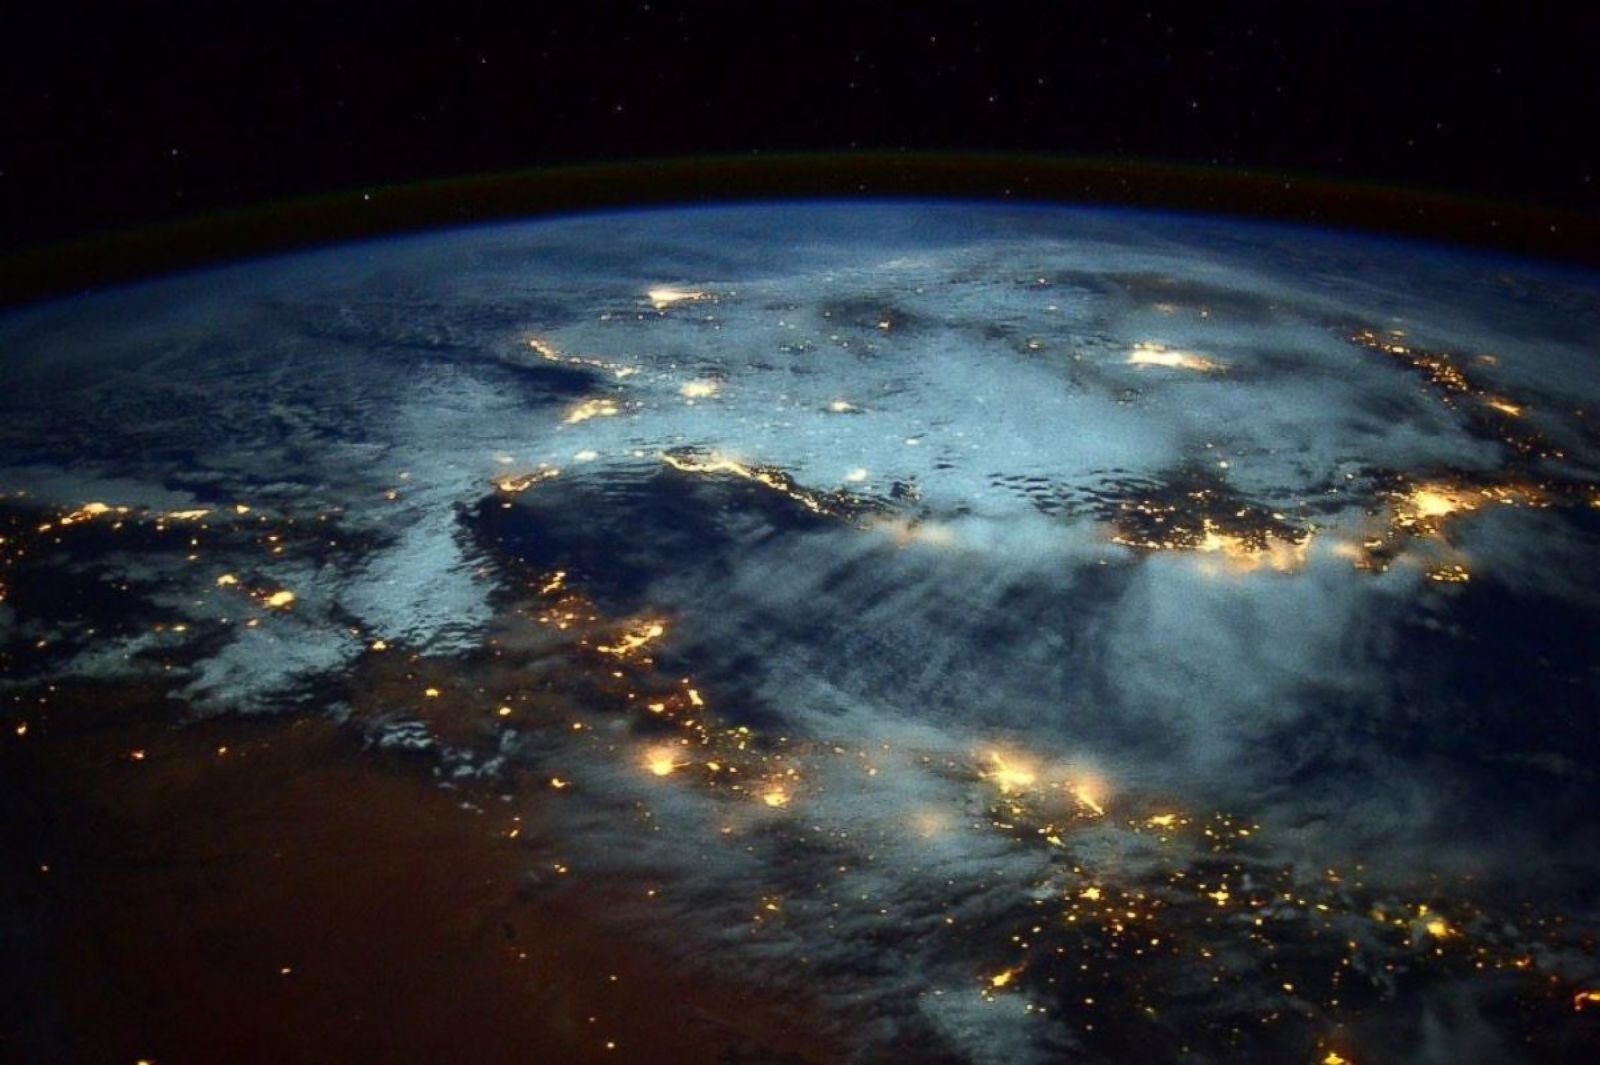 Space view. Снимки НАСА из космоса. О земле и космосе. Красивый вид из космоса. Планета вид из космоса.